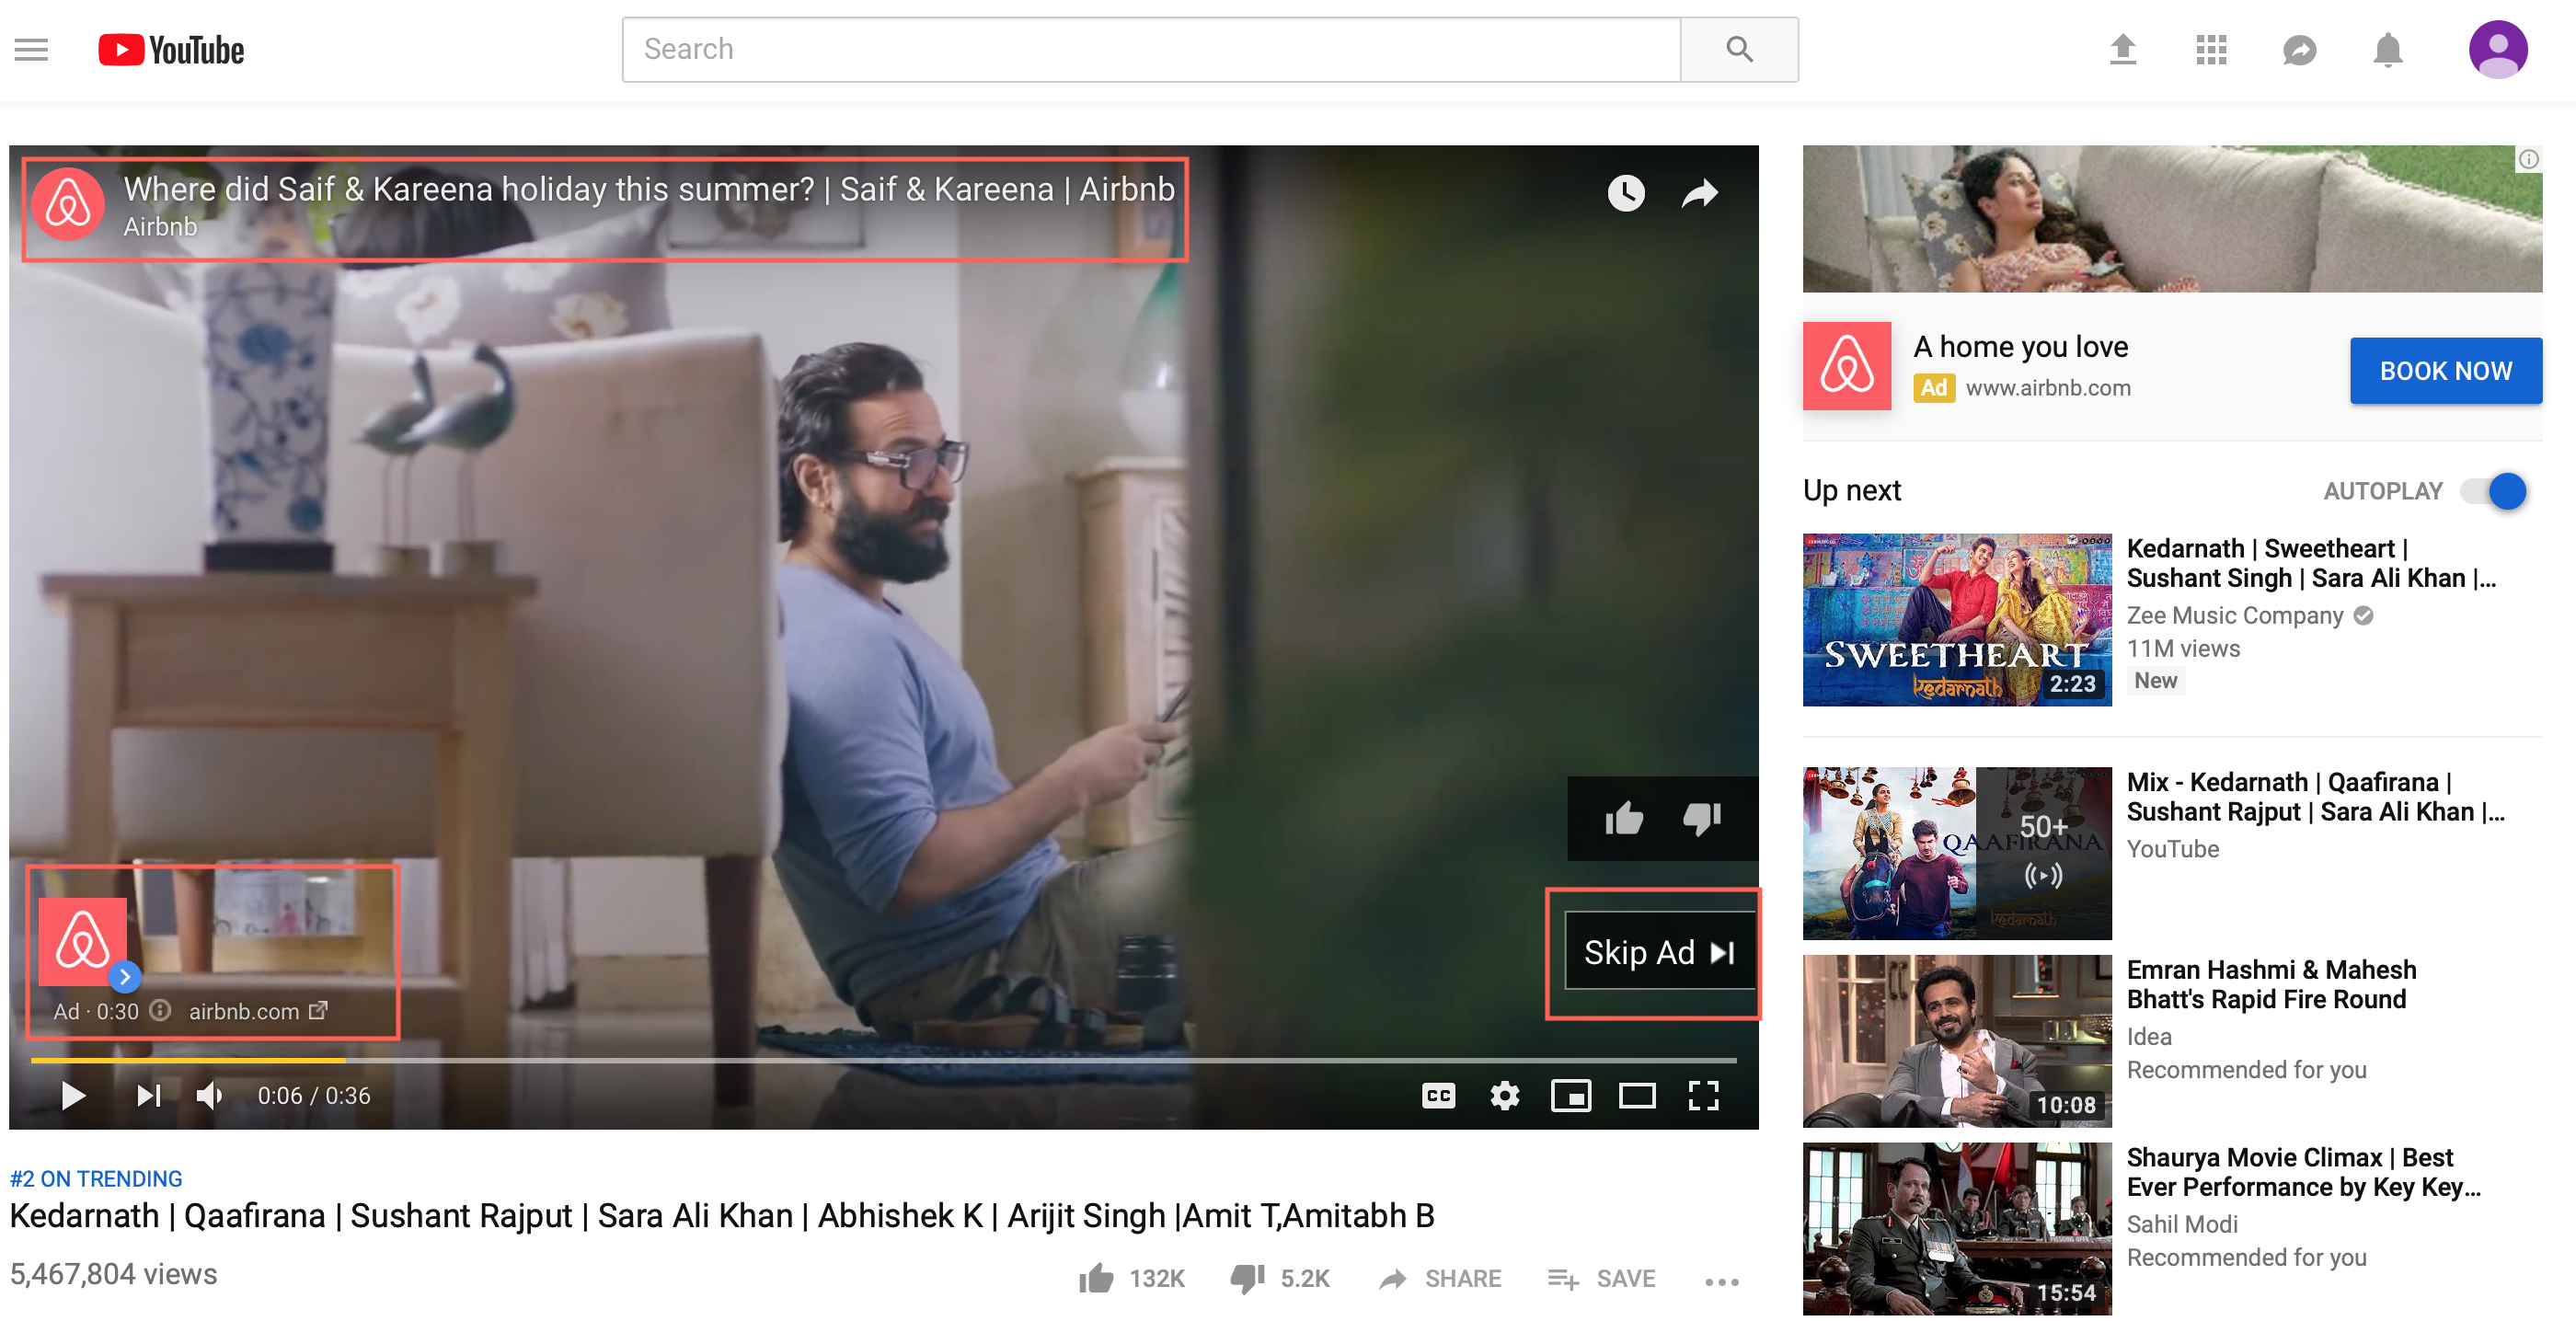 YouTube Ads in Hindi